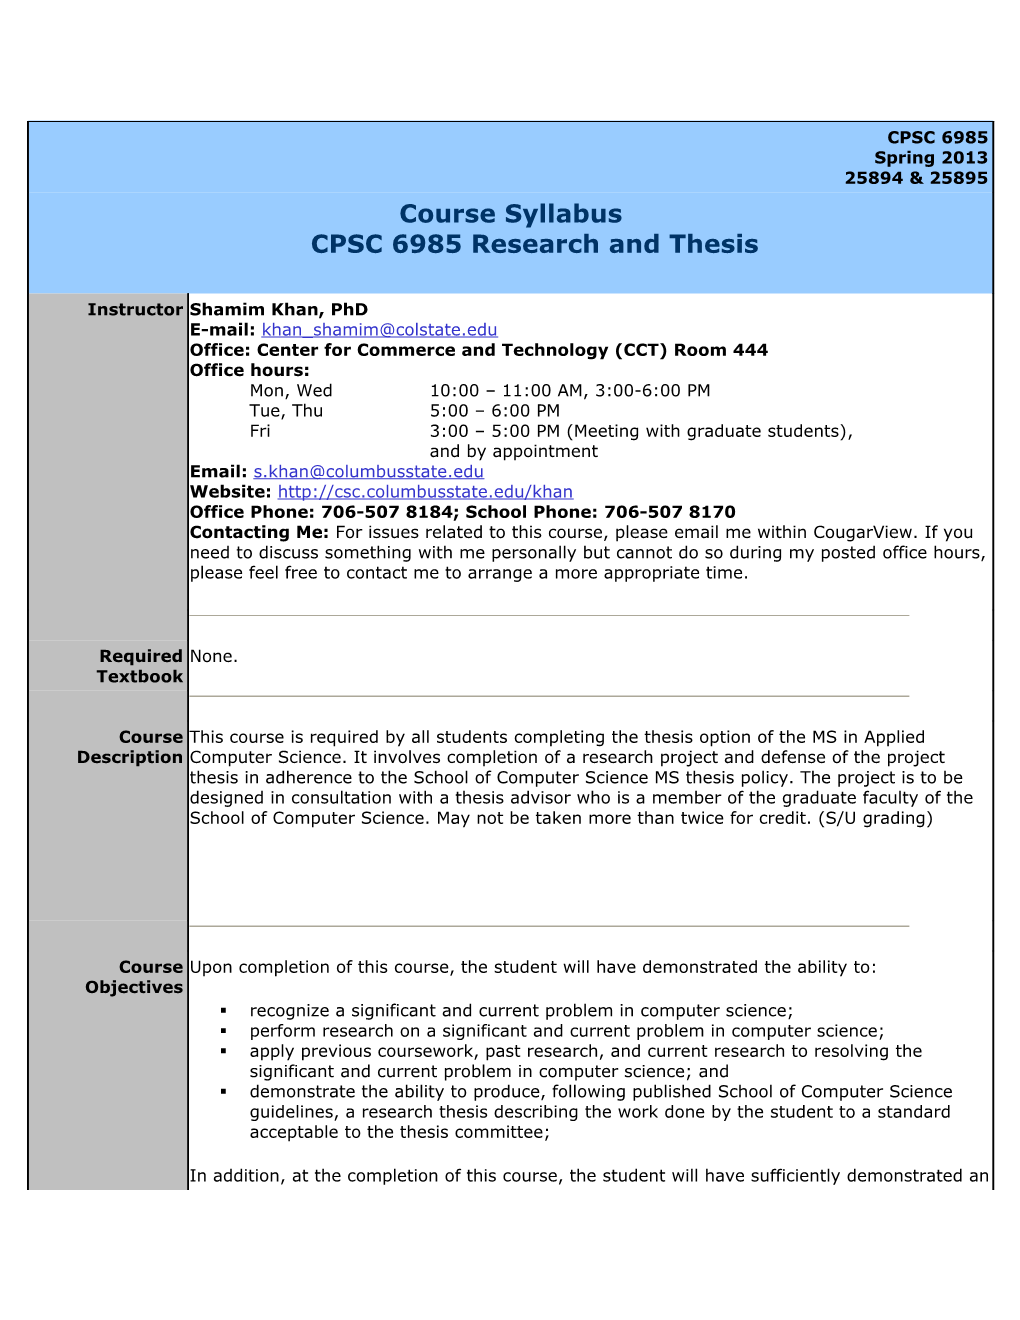 CPSC 6985 Fall 2009 Syllabus